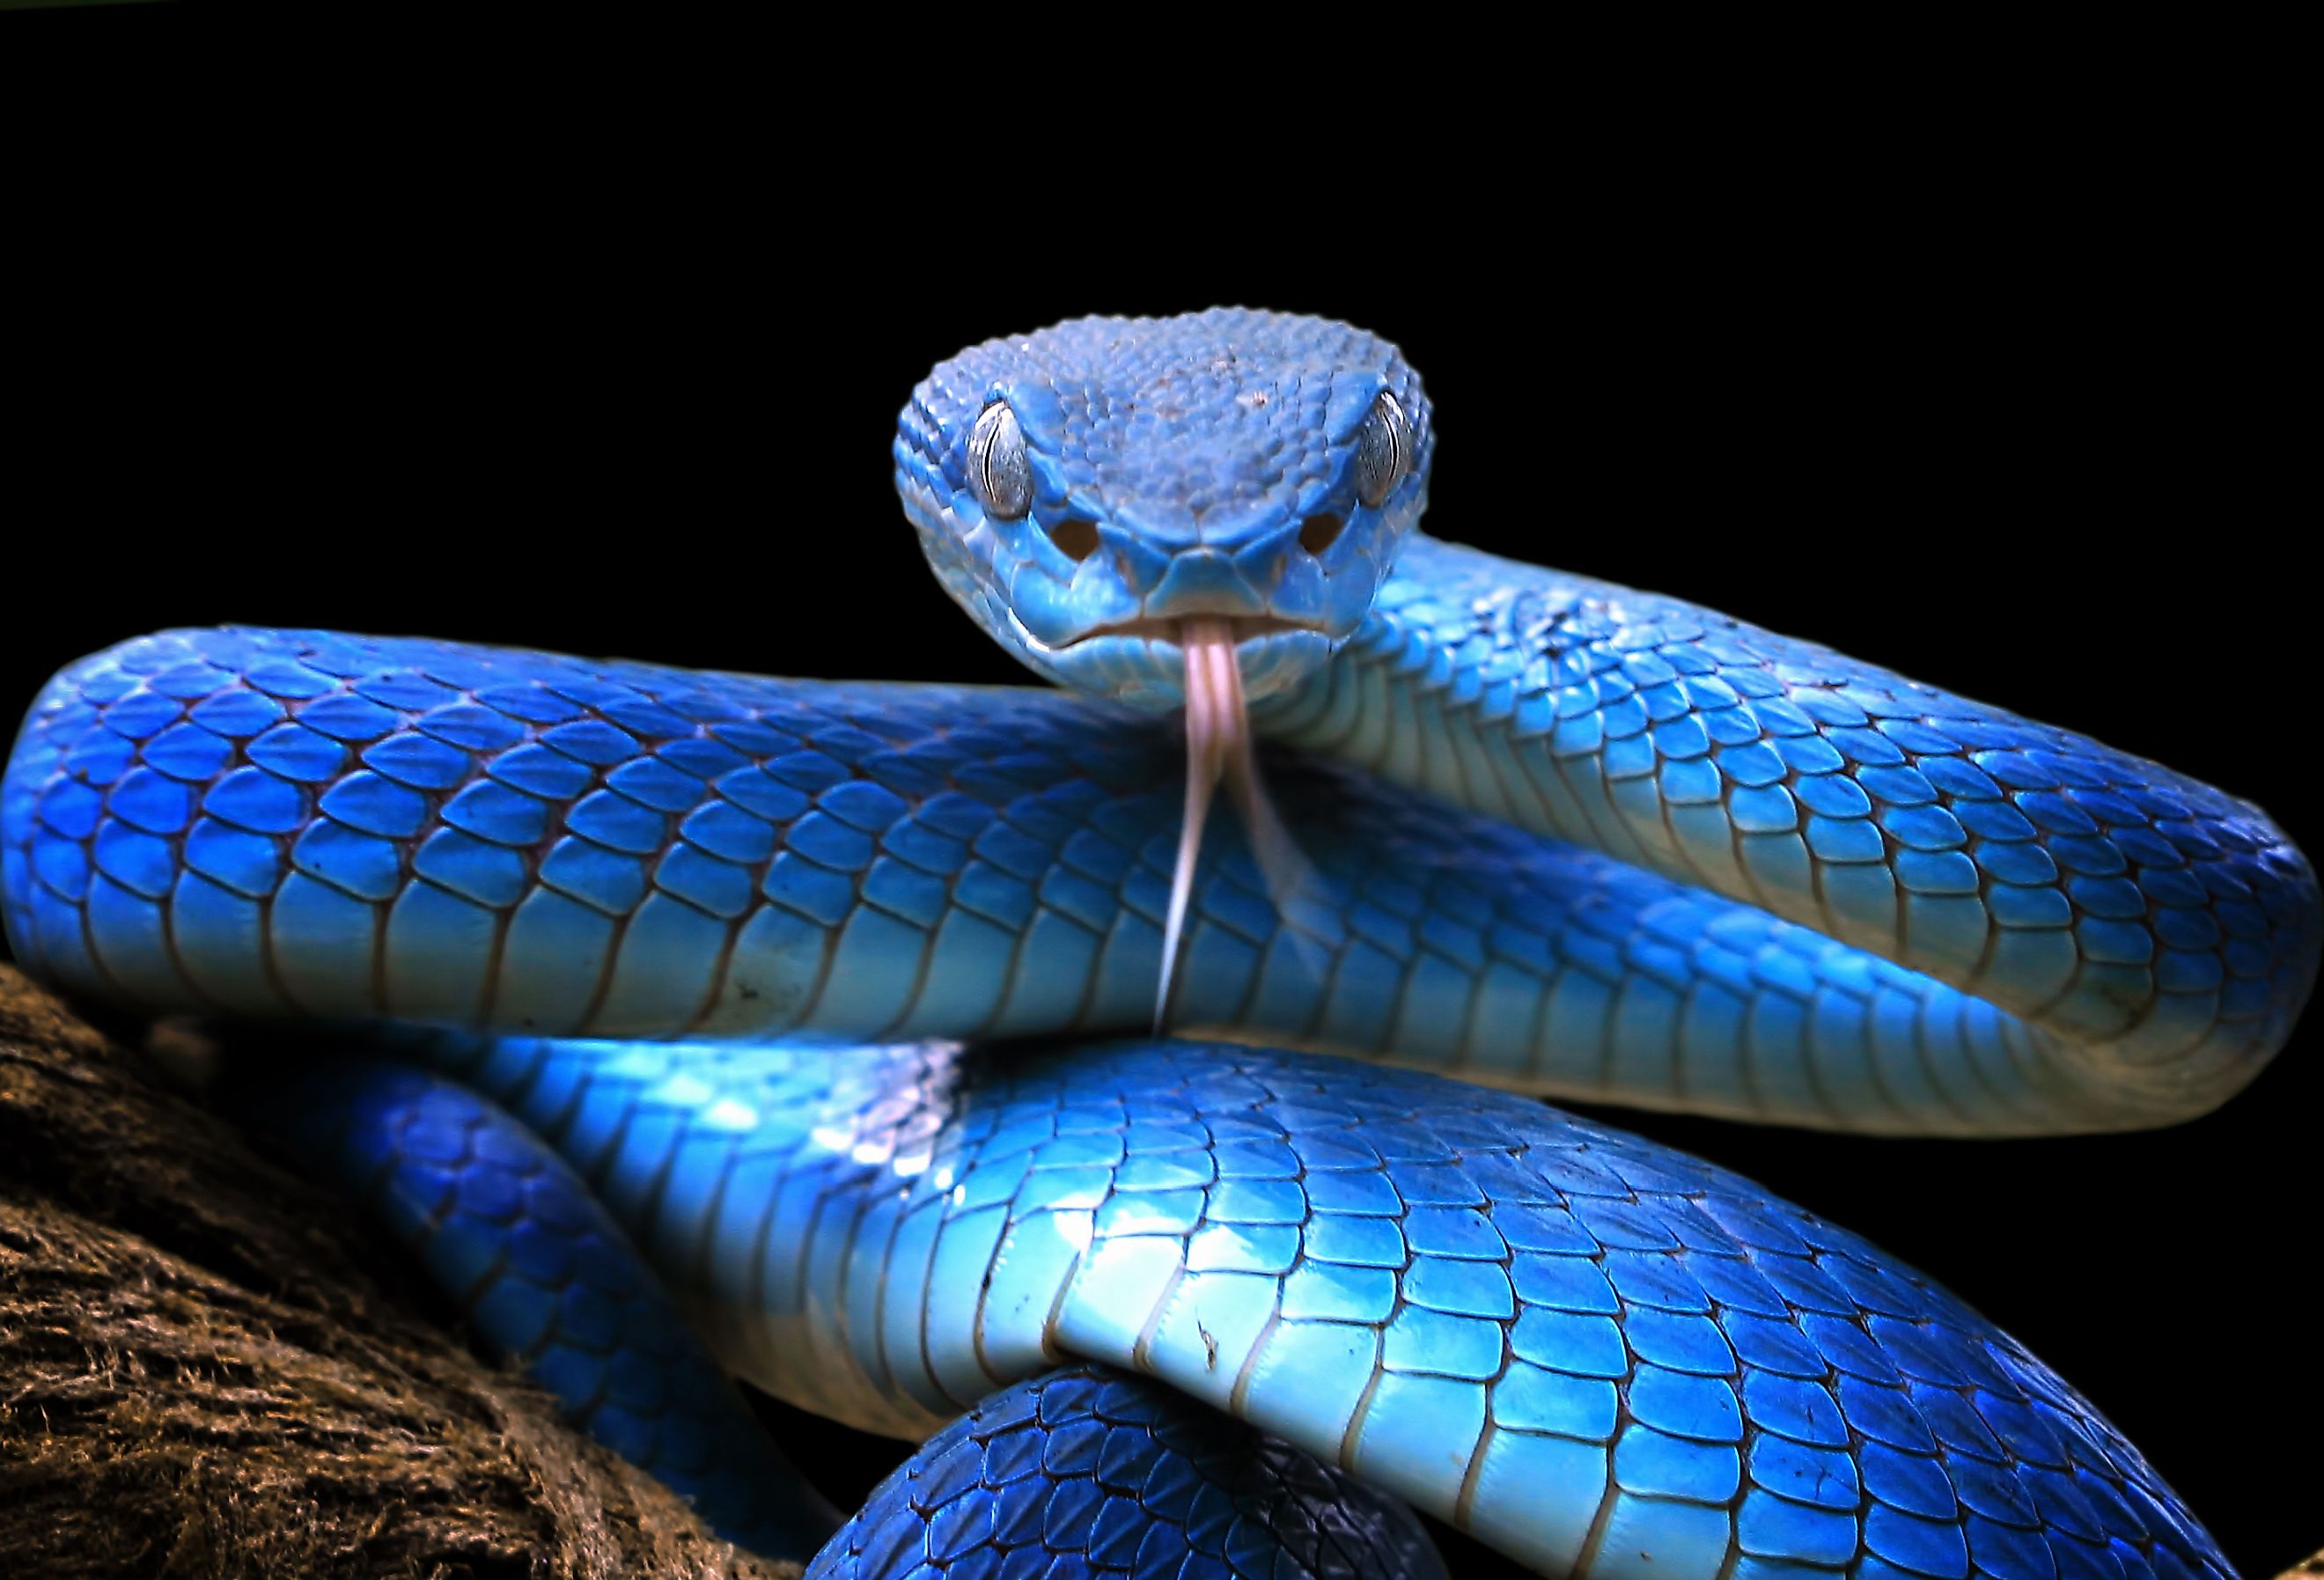 Close-up shot of Blue viper snake, Blue insularis, Trimeresurus Insularis. Image credit Kurit afshen via Shutterstock.